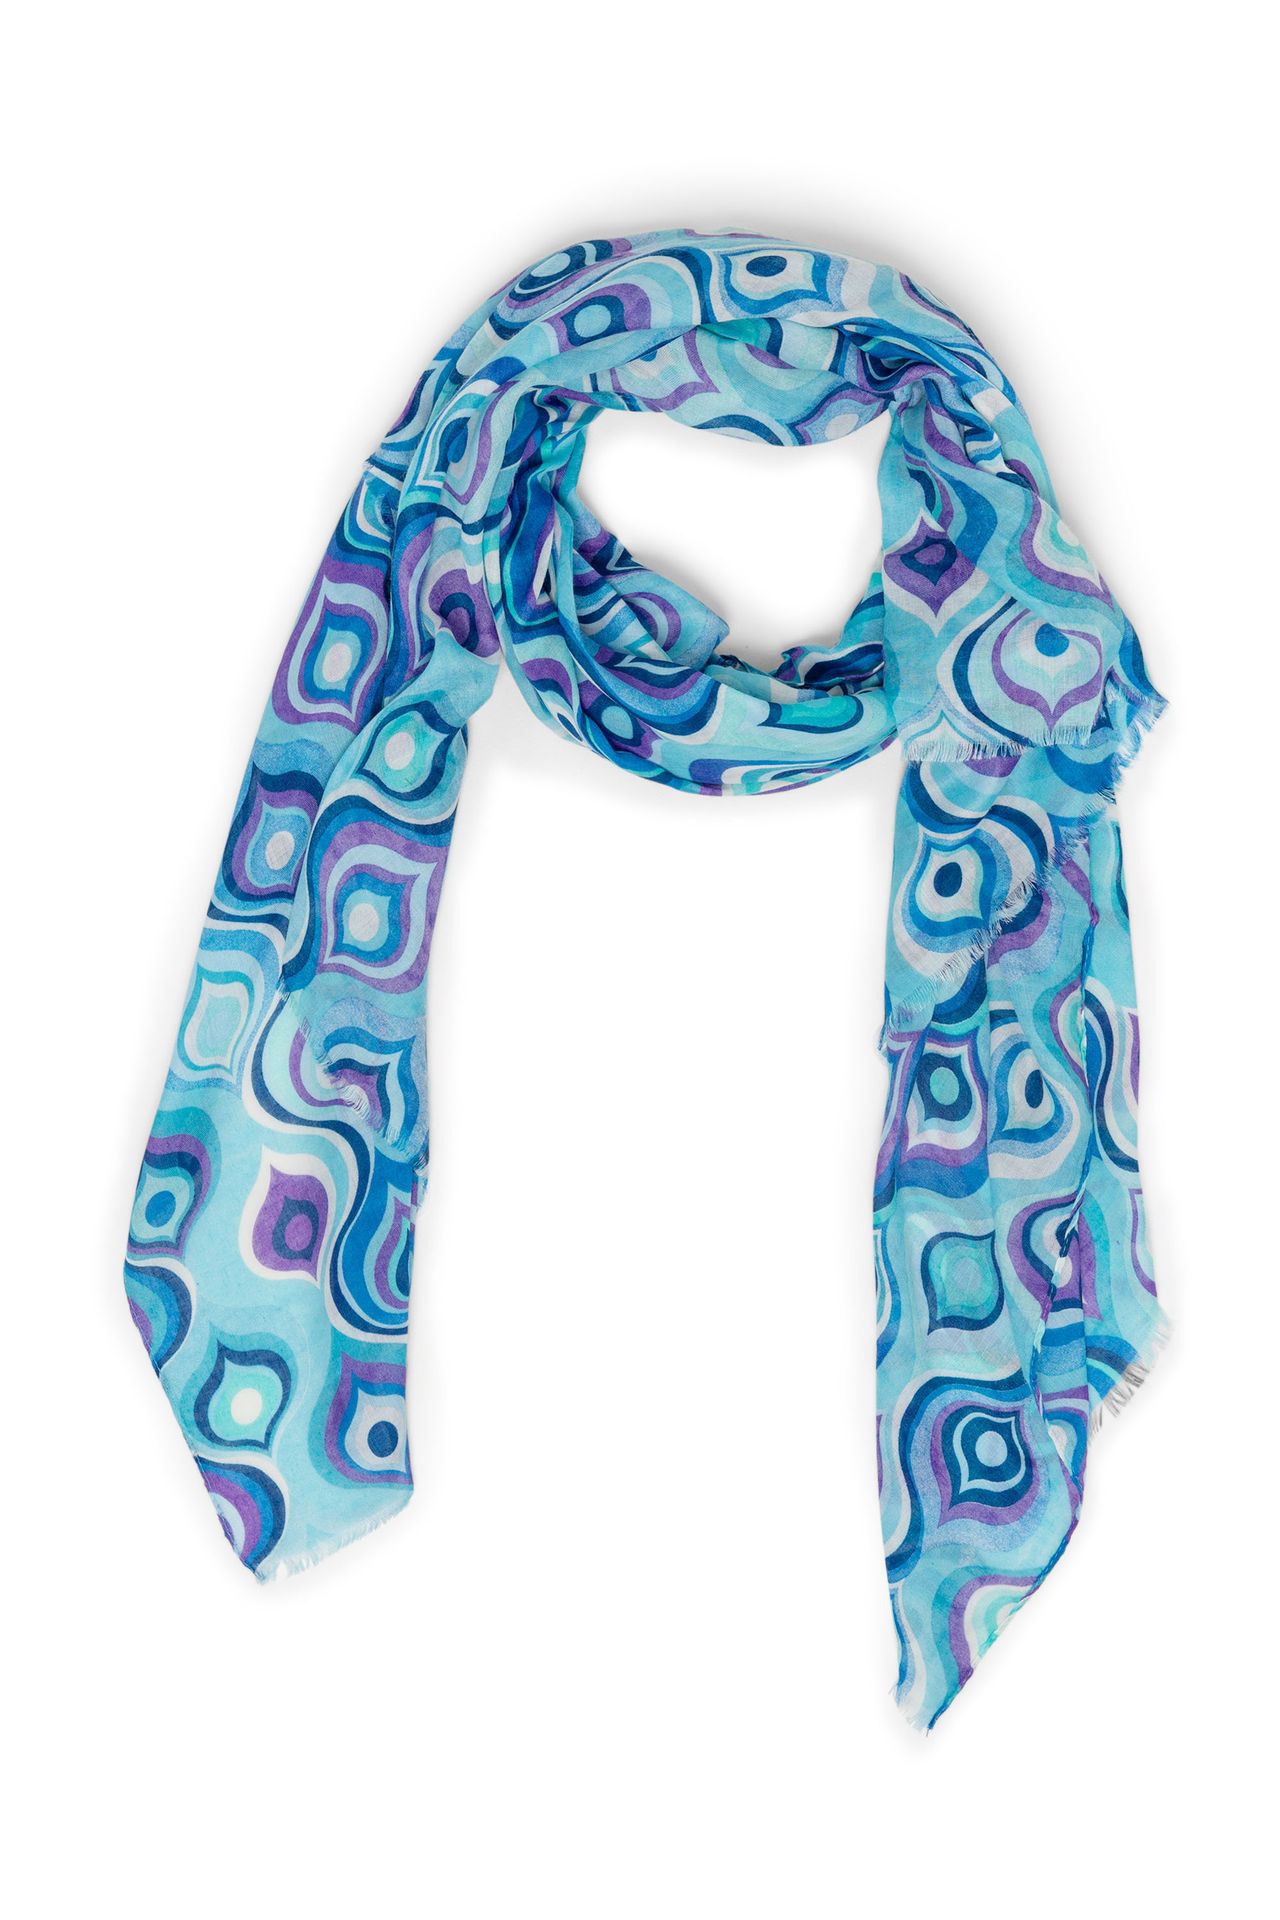 Norah Blauwe sjaal blue/purple 213578-438